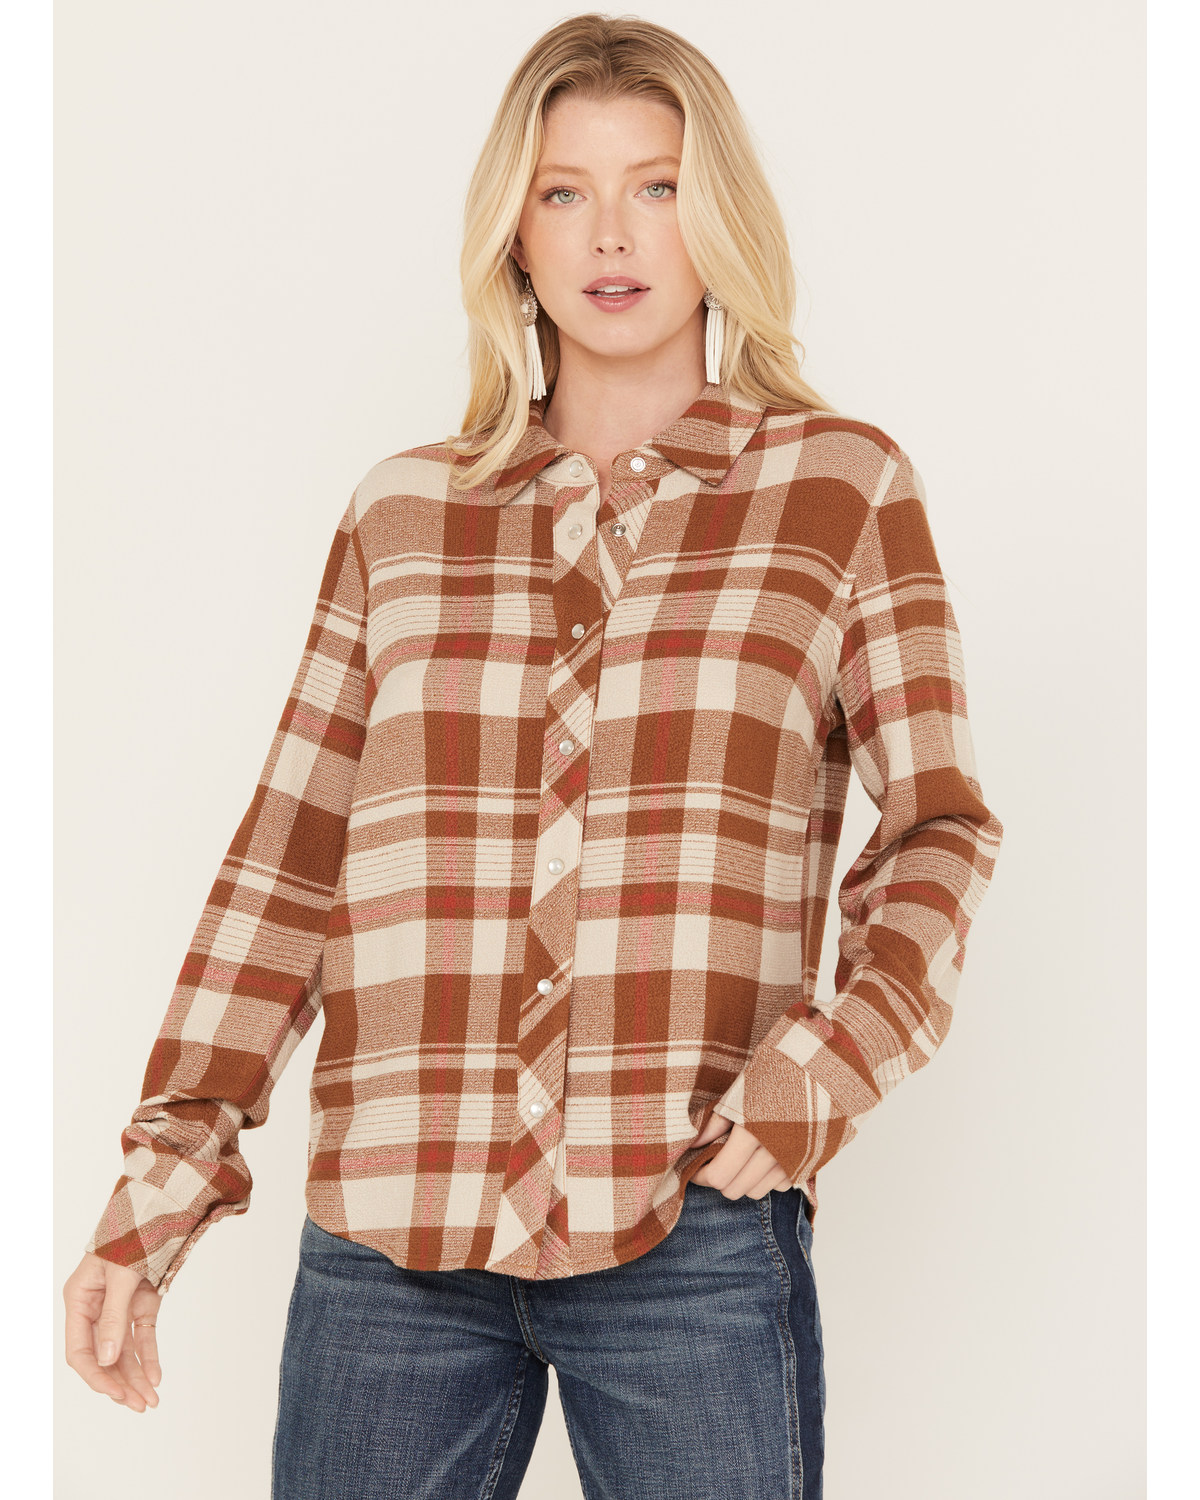 Idyllwind Women's Woodlands Feather Plaid Print Long Sleeve Pearl Snap Western Shirt